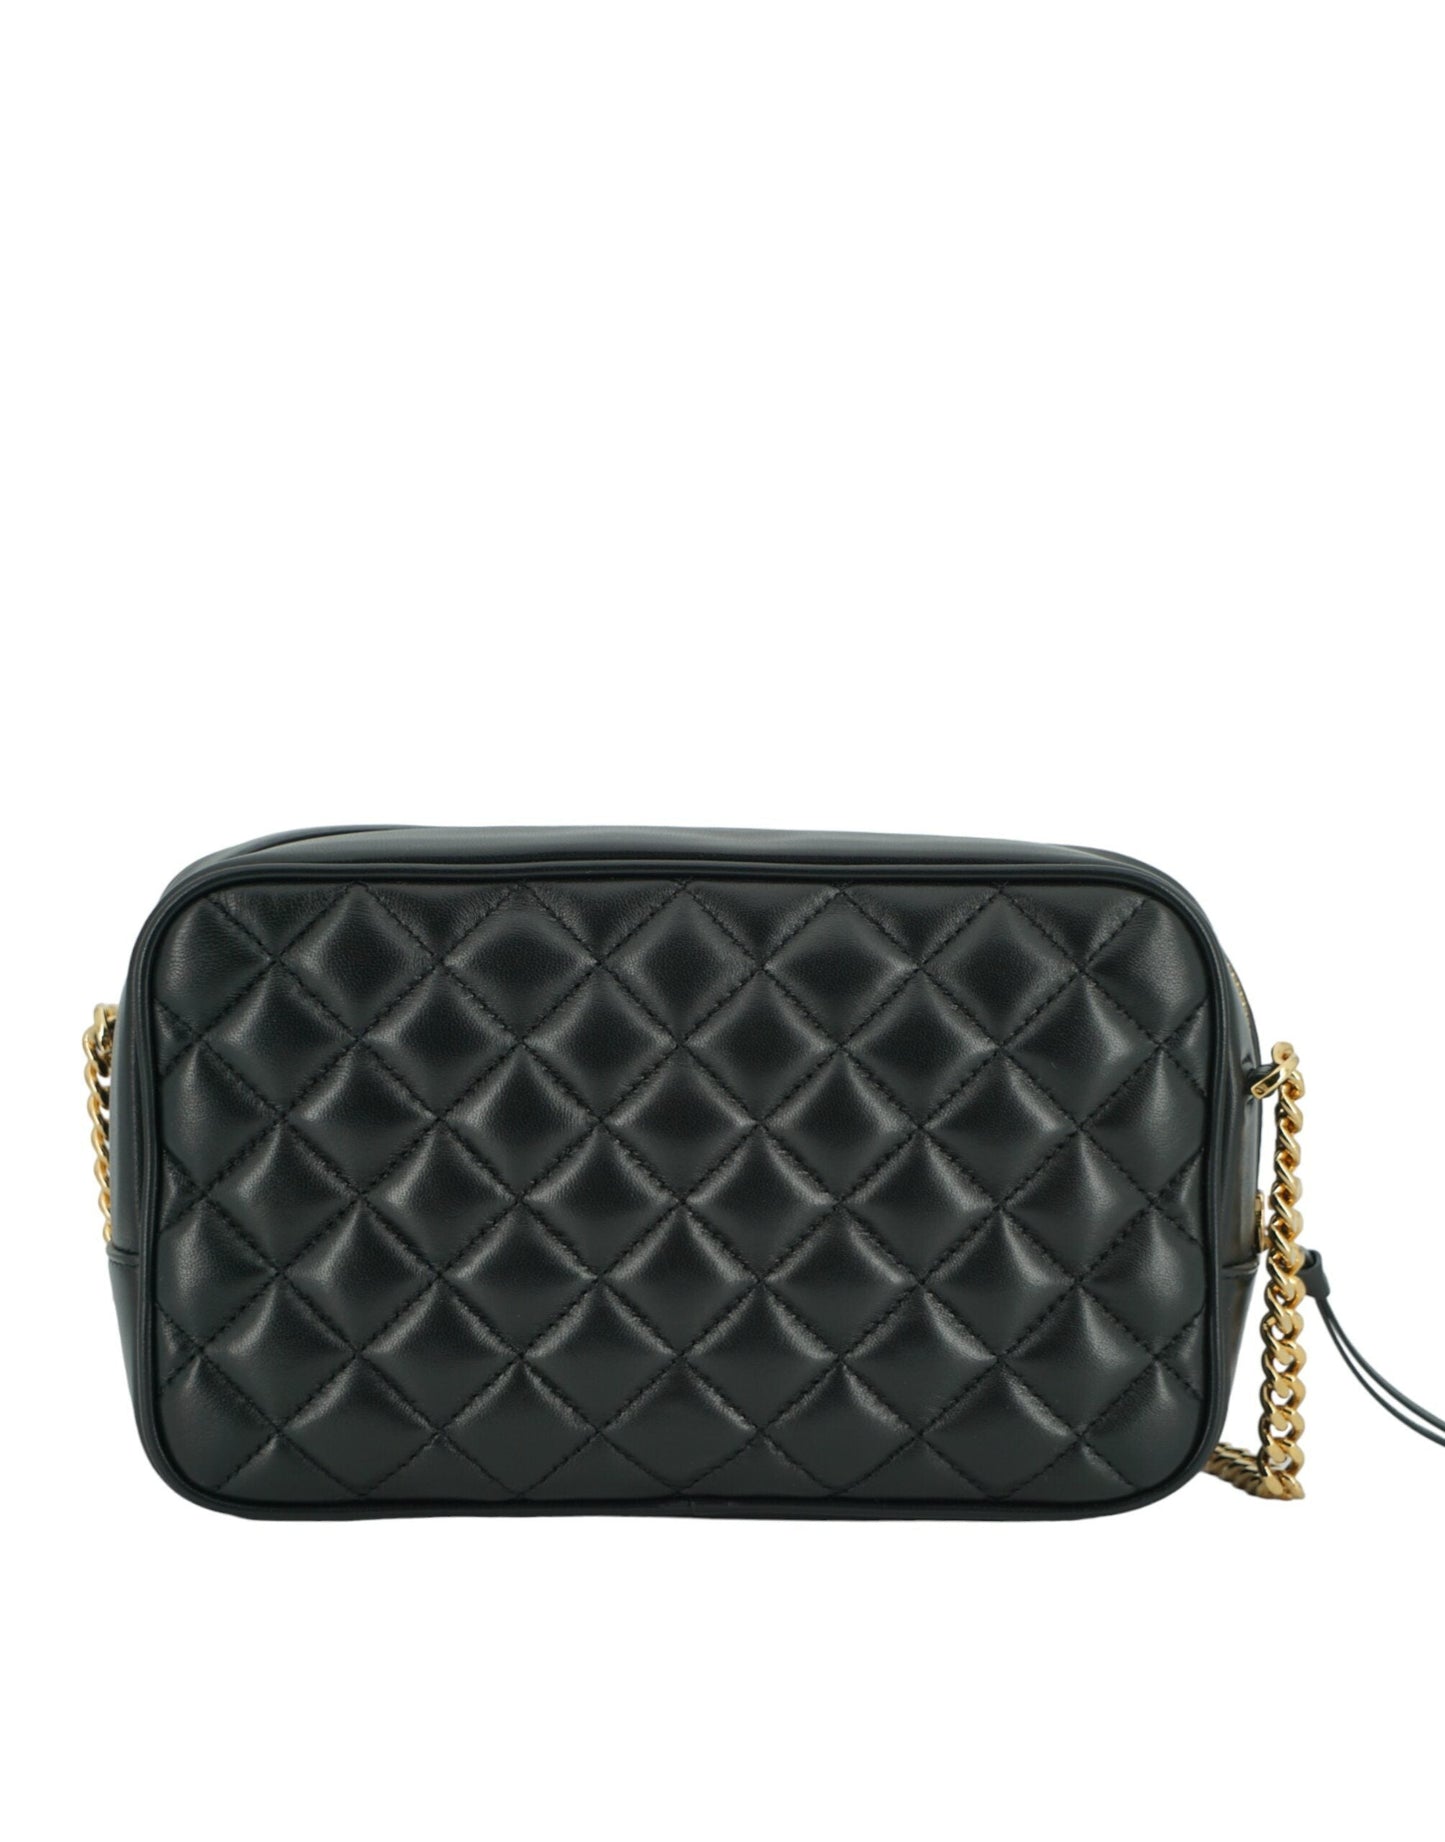 Versace Black Lamb Leather Medium Camera Shoulder Bag | Fashionsarah.com